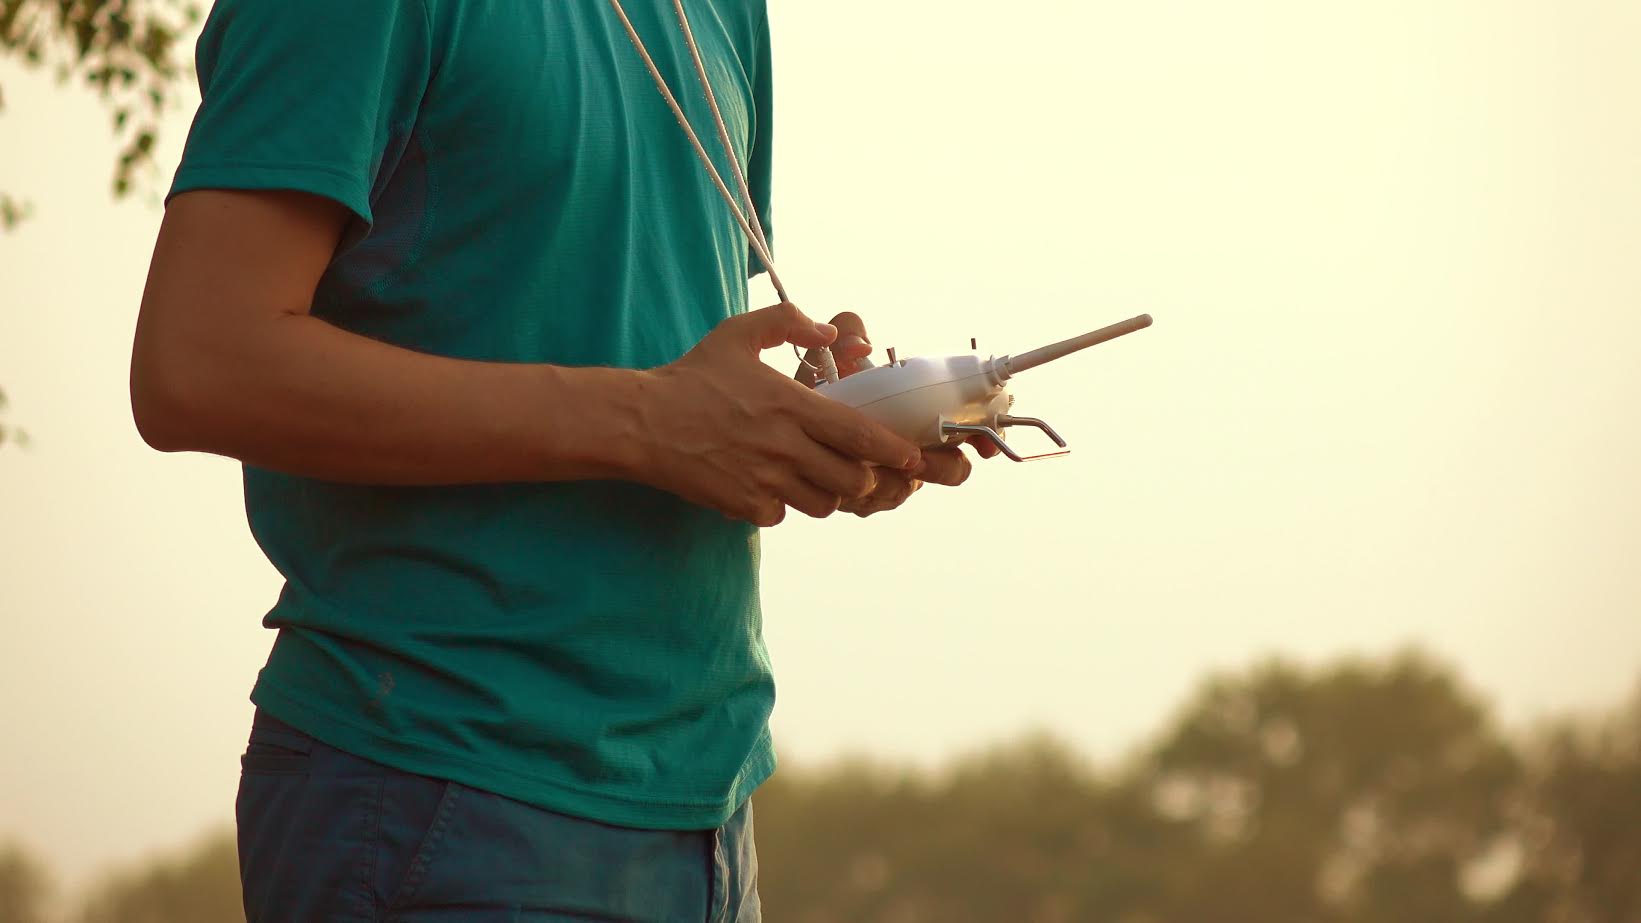 Man using drone RC remote